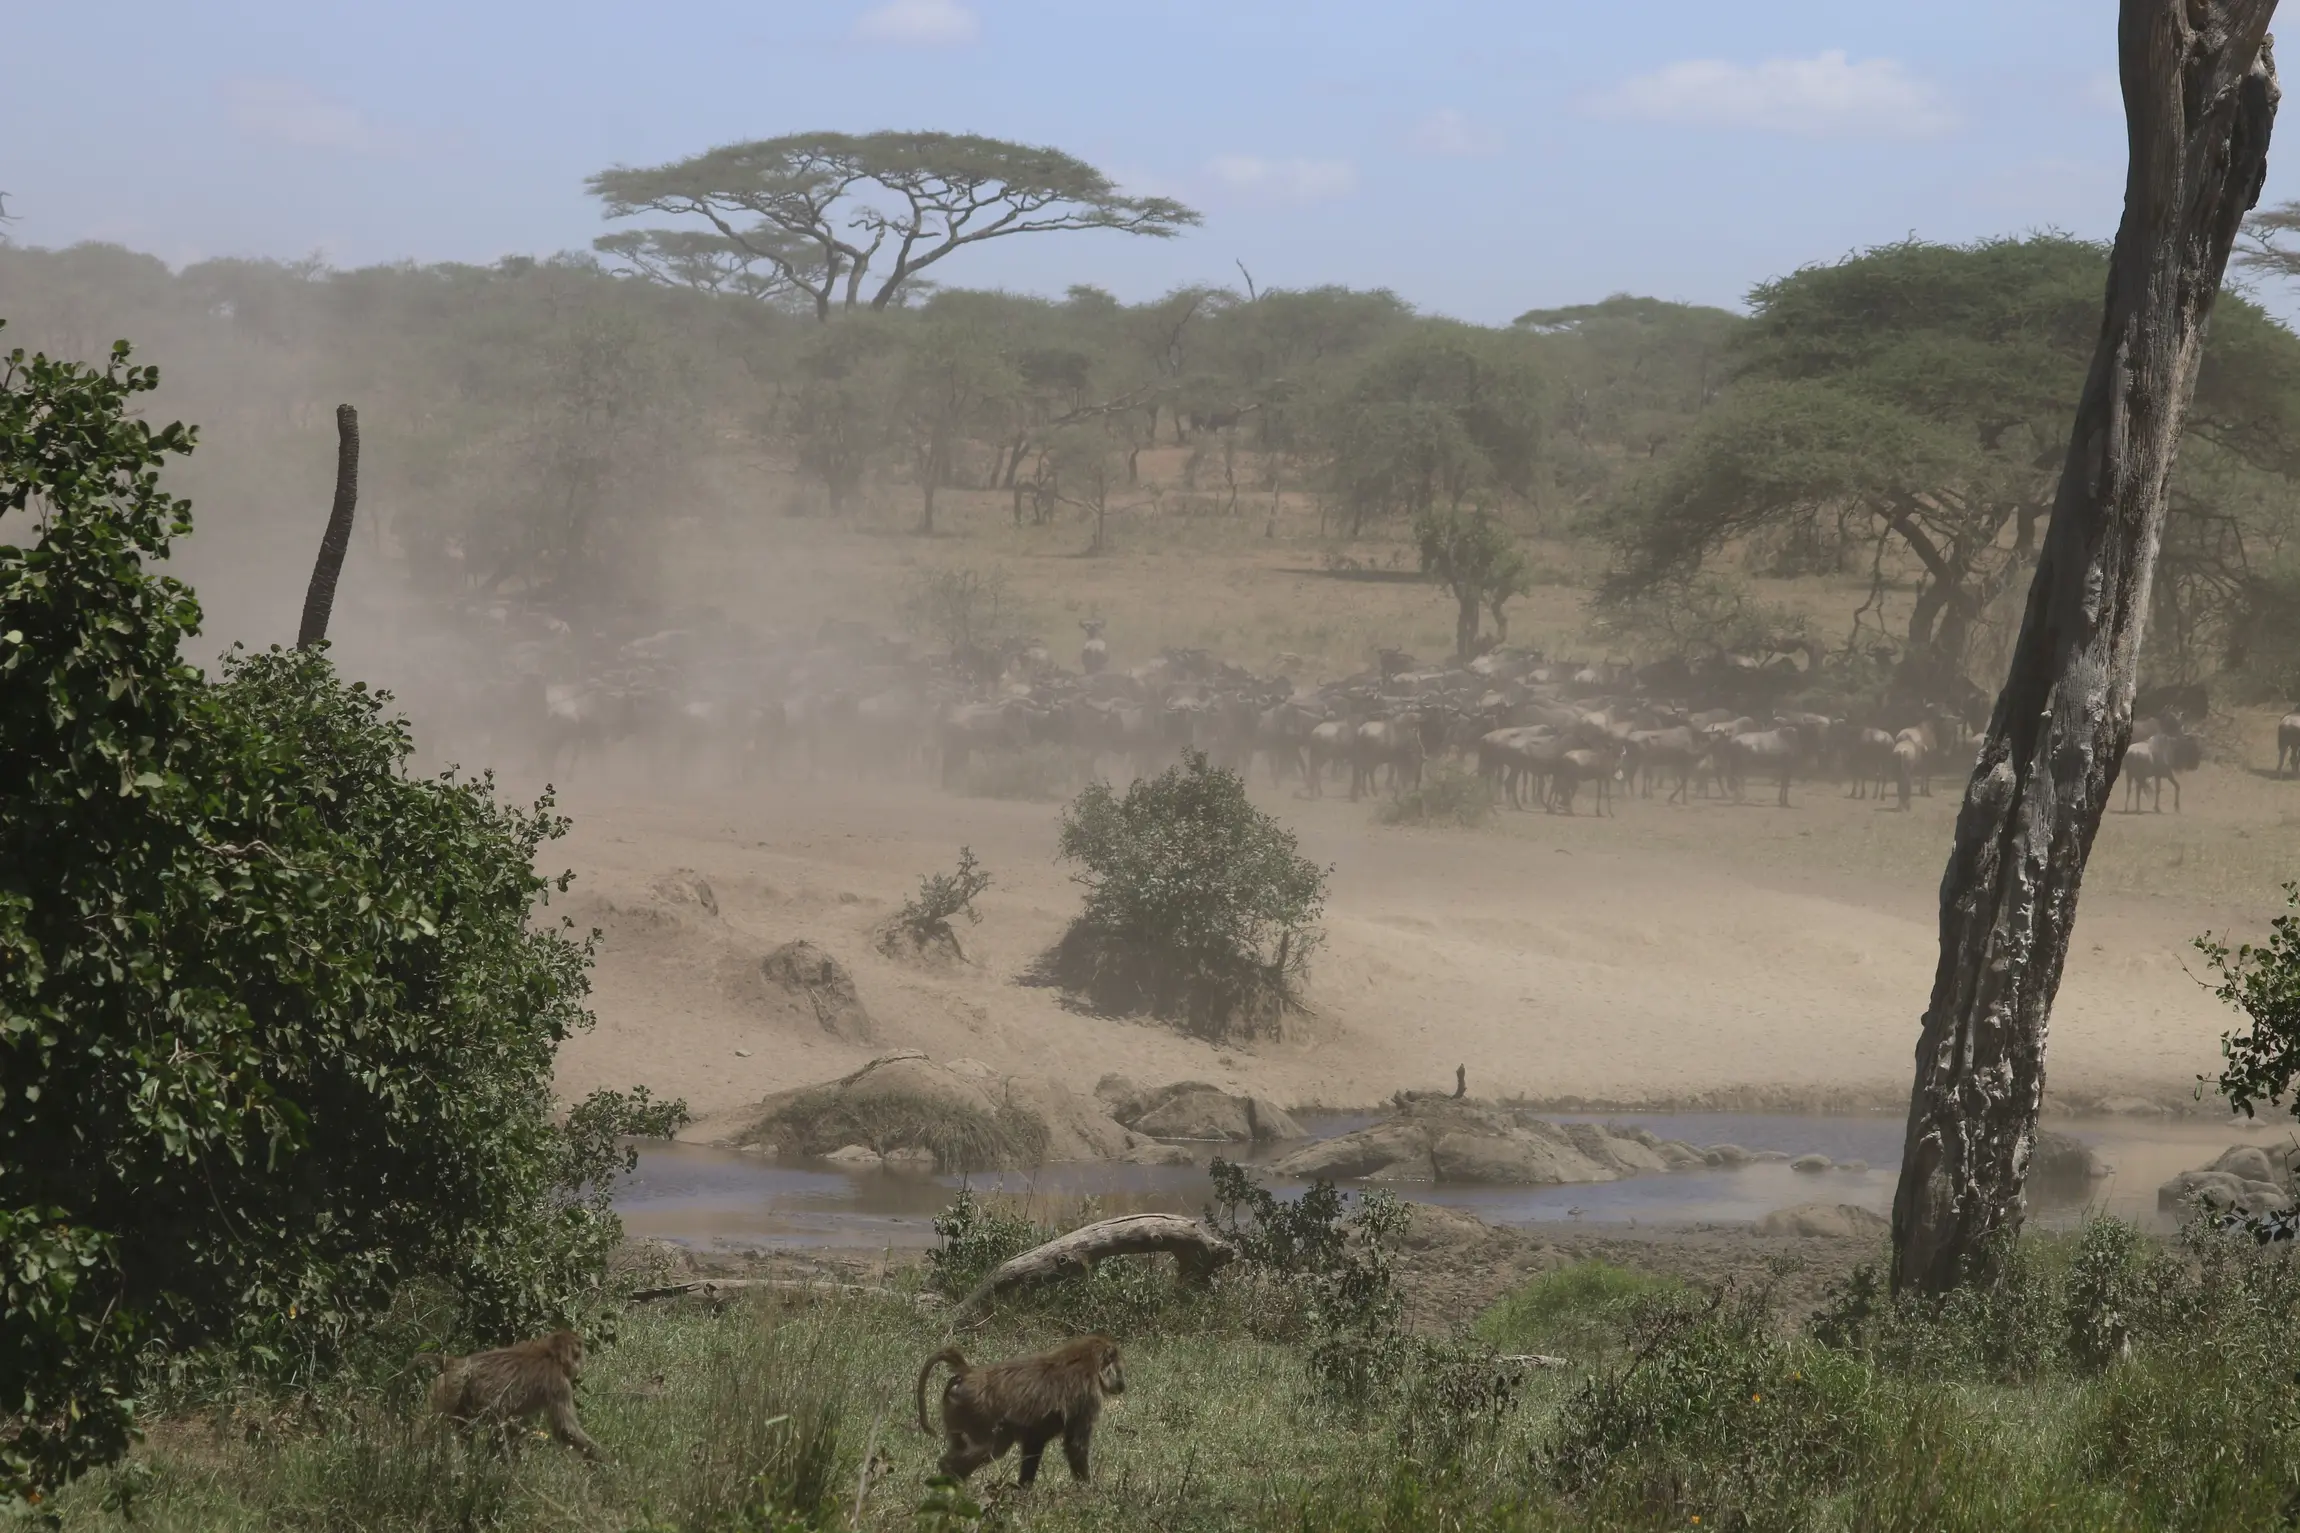 Wildbeests and baboons at Grumeti River